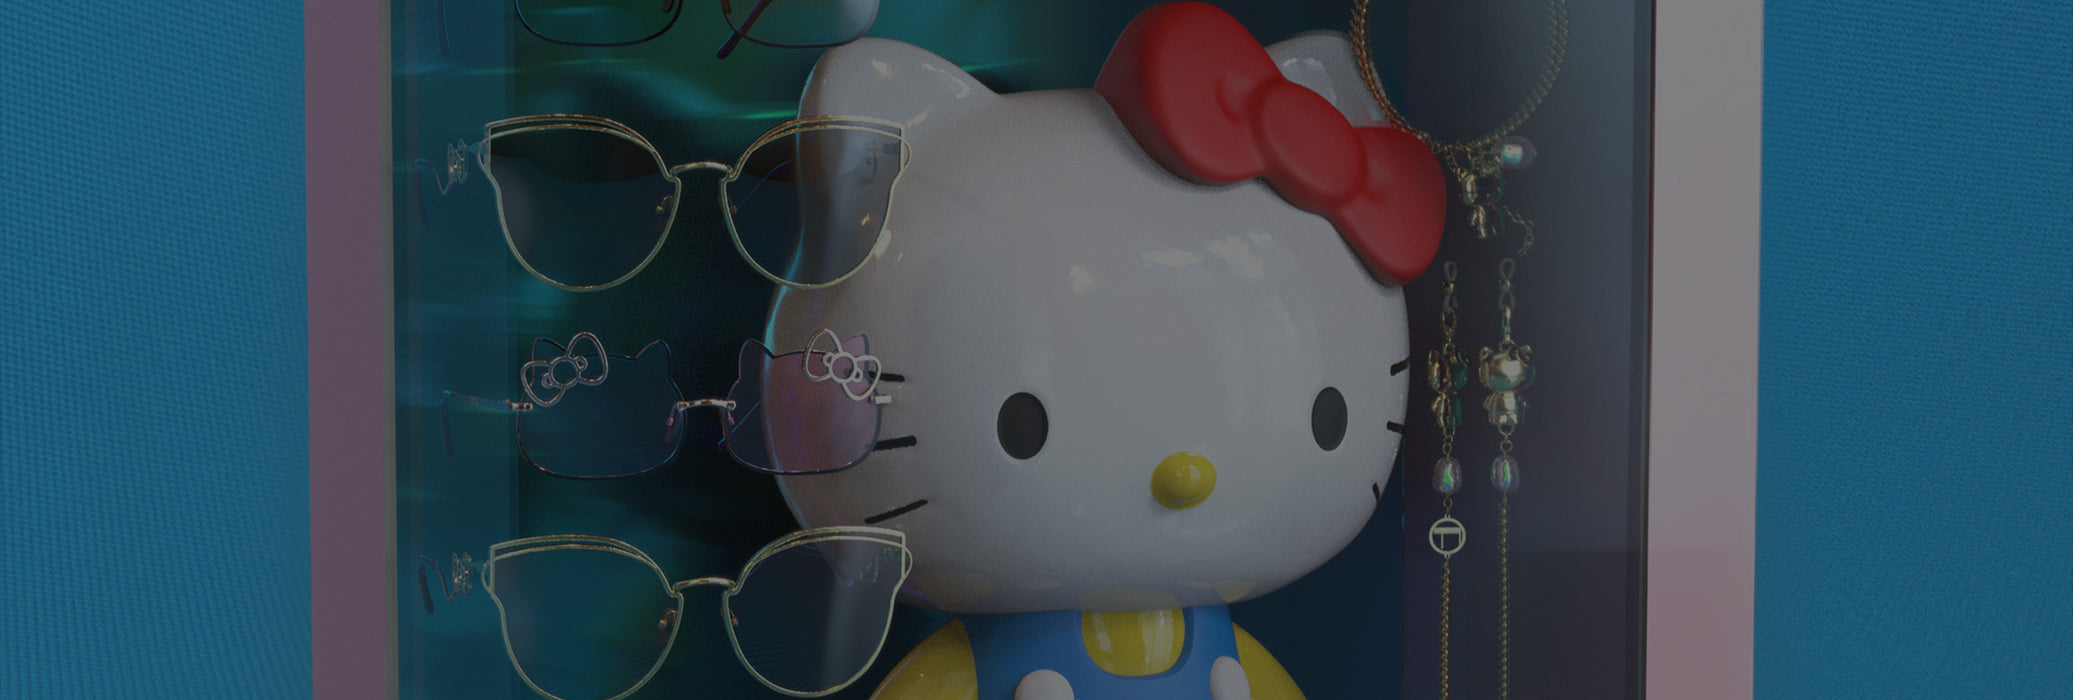 100+] Hello Kitty Pfp Wallpapers